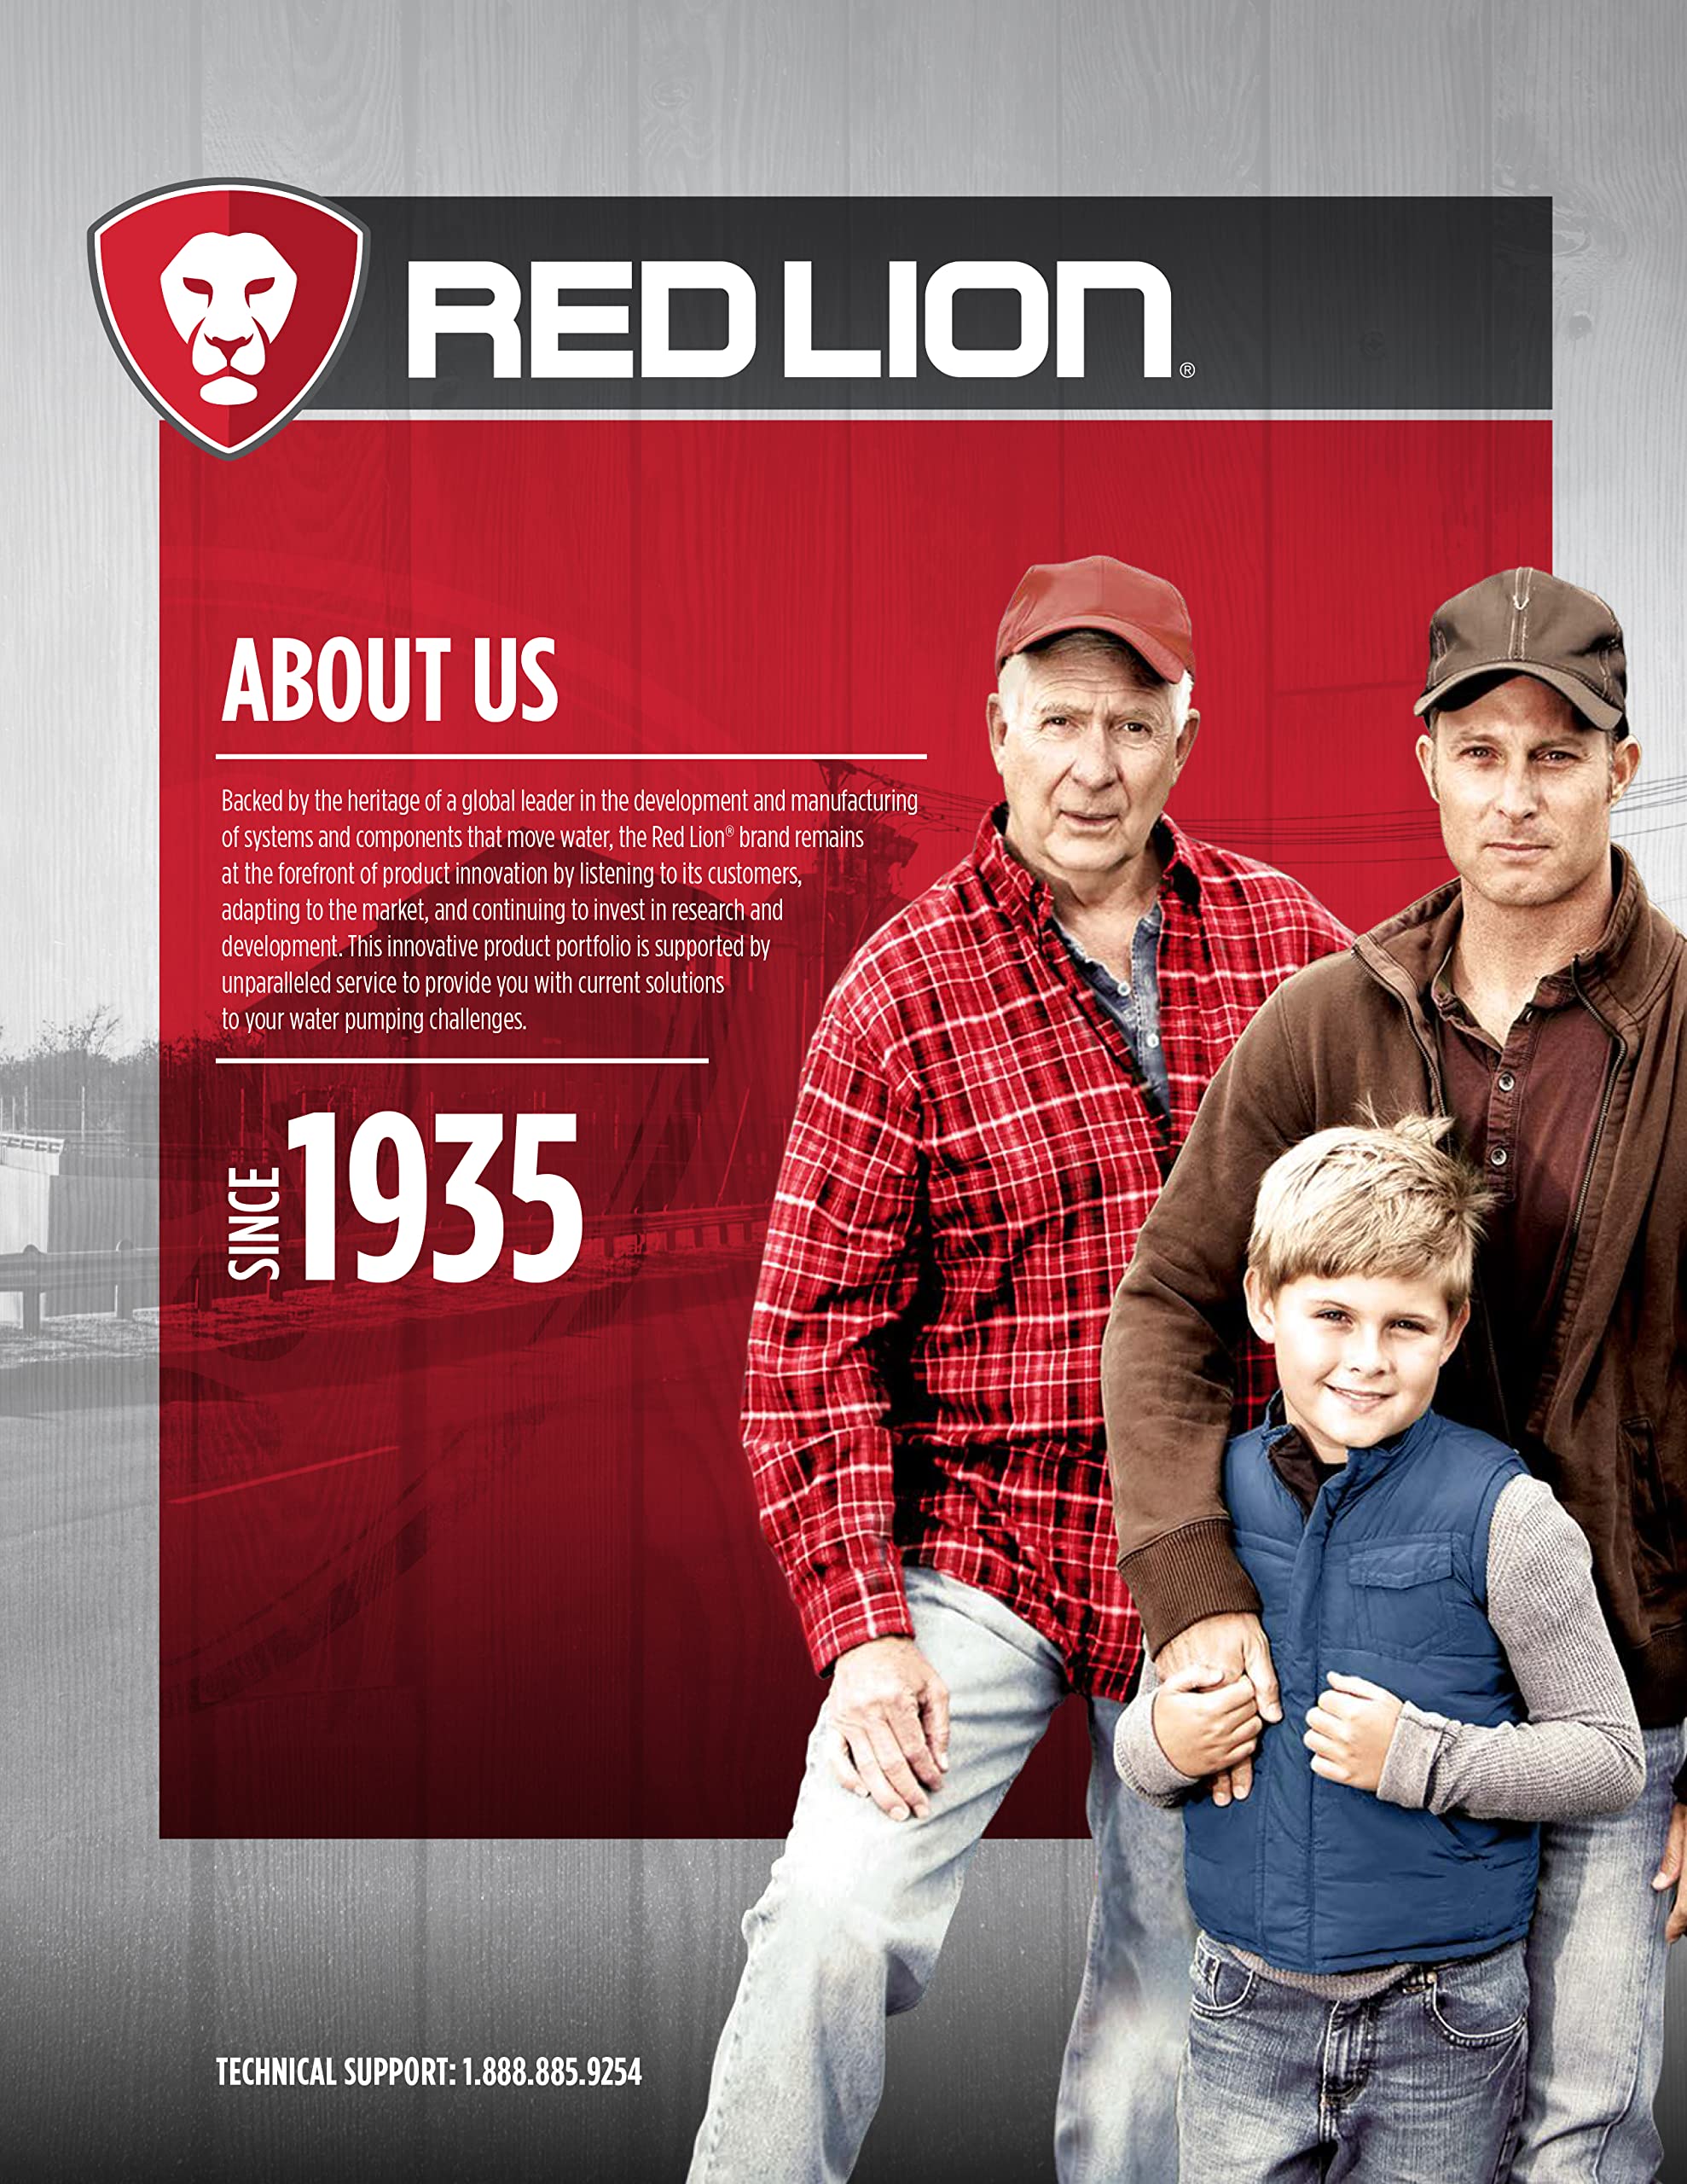 Red Lion 14942013 154 GPH Drill Powered Transfer Pump, Black, RLMPDP